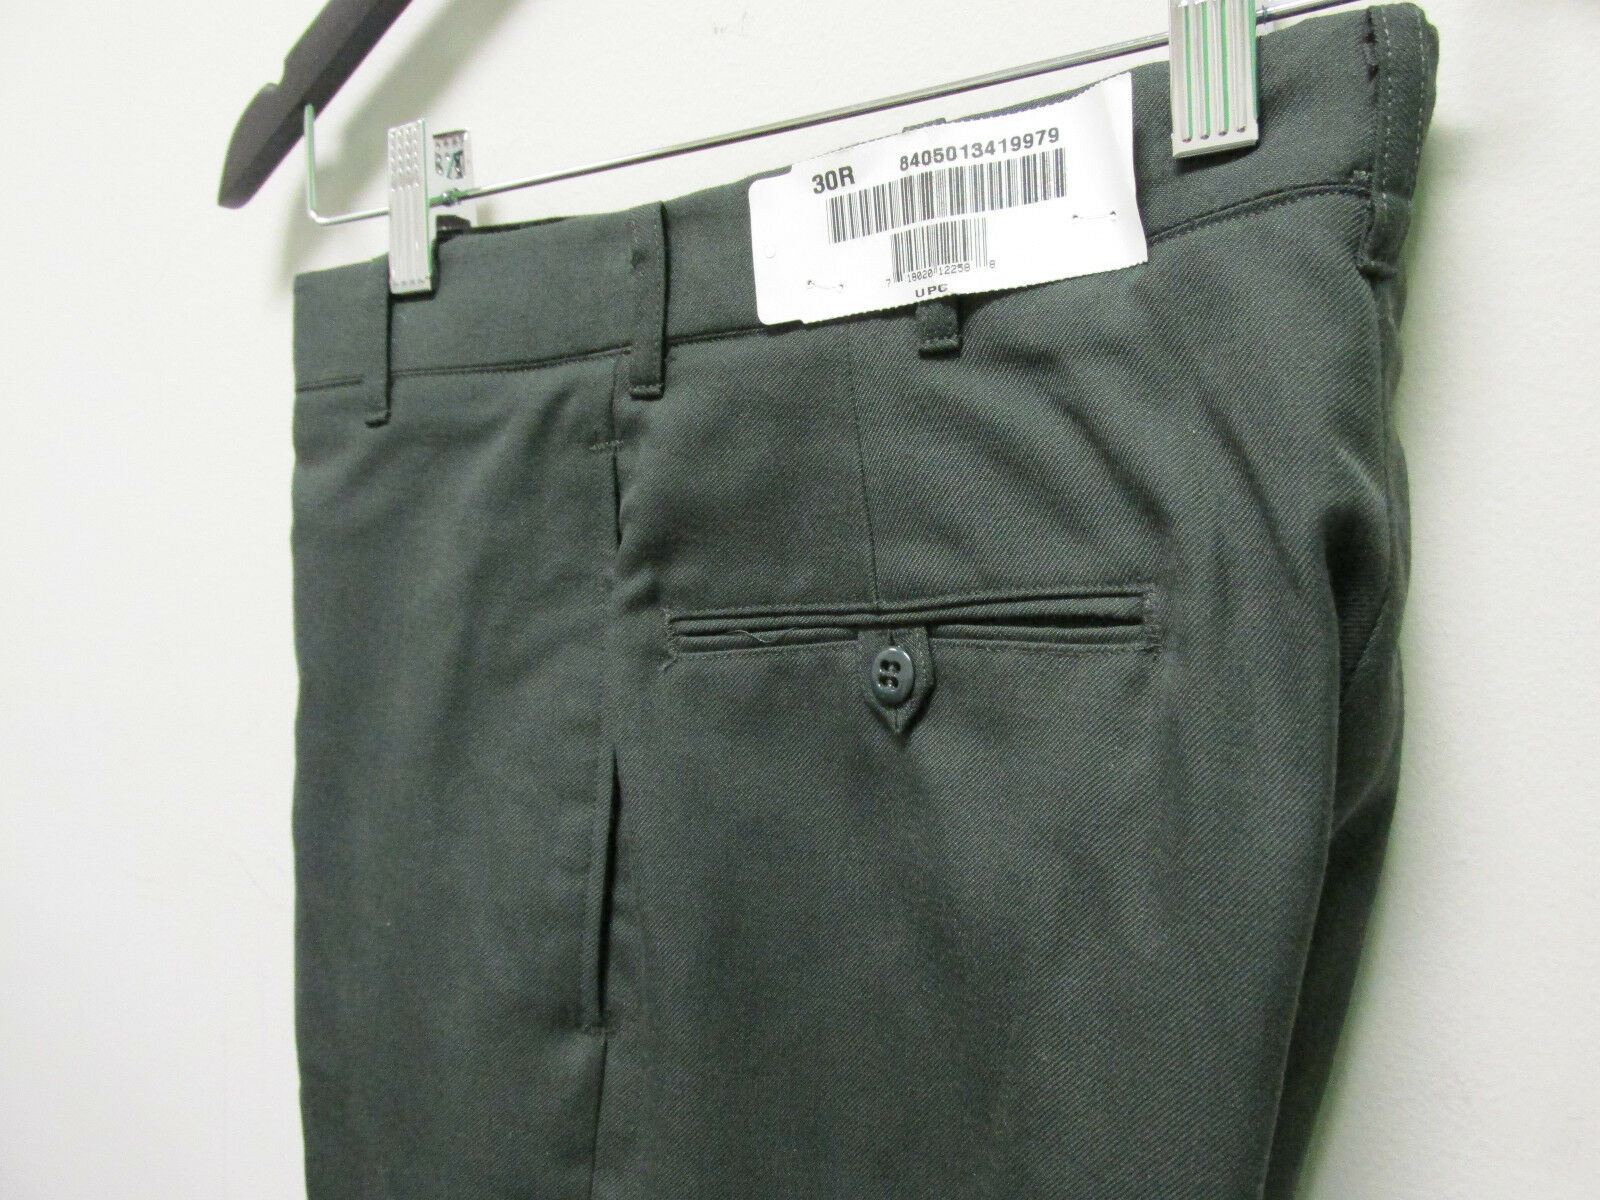 Men's Army Class A Dress Pants Dress Green - New Military Surplus - 30R UNHEMMED